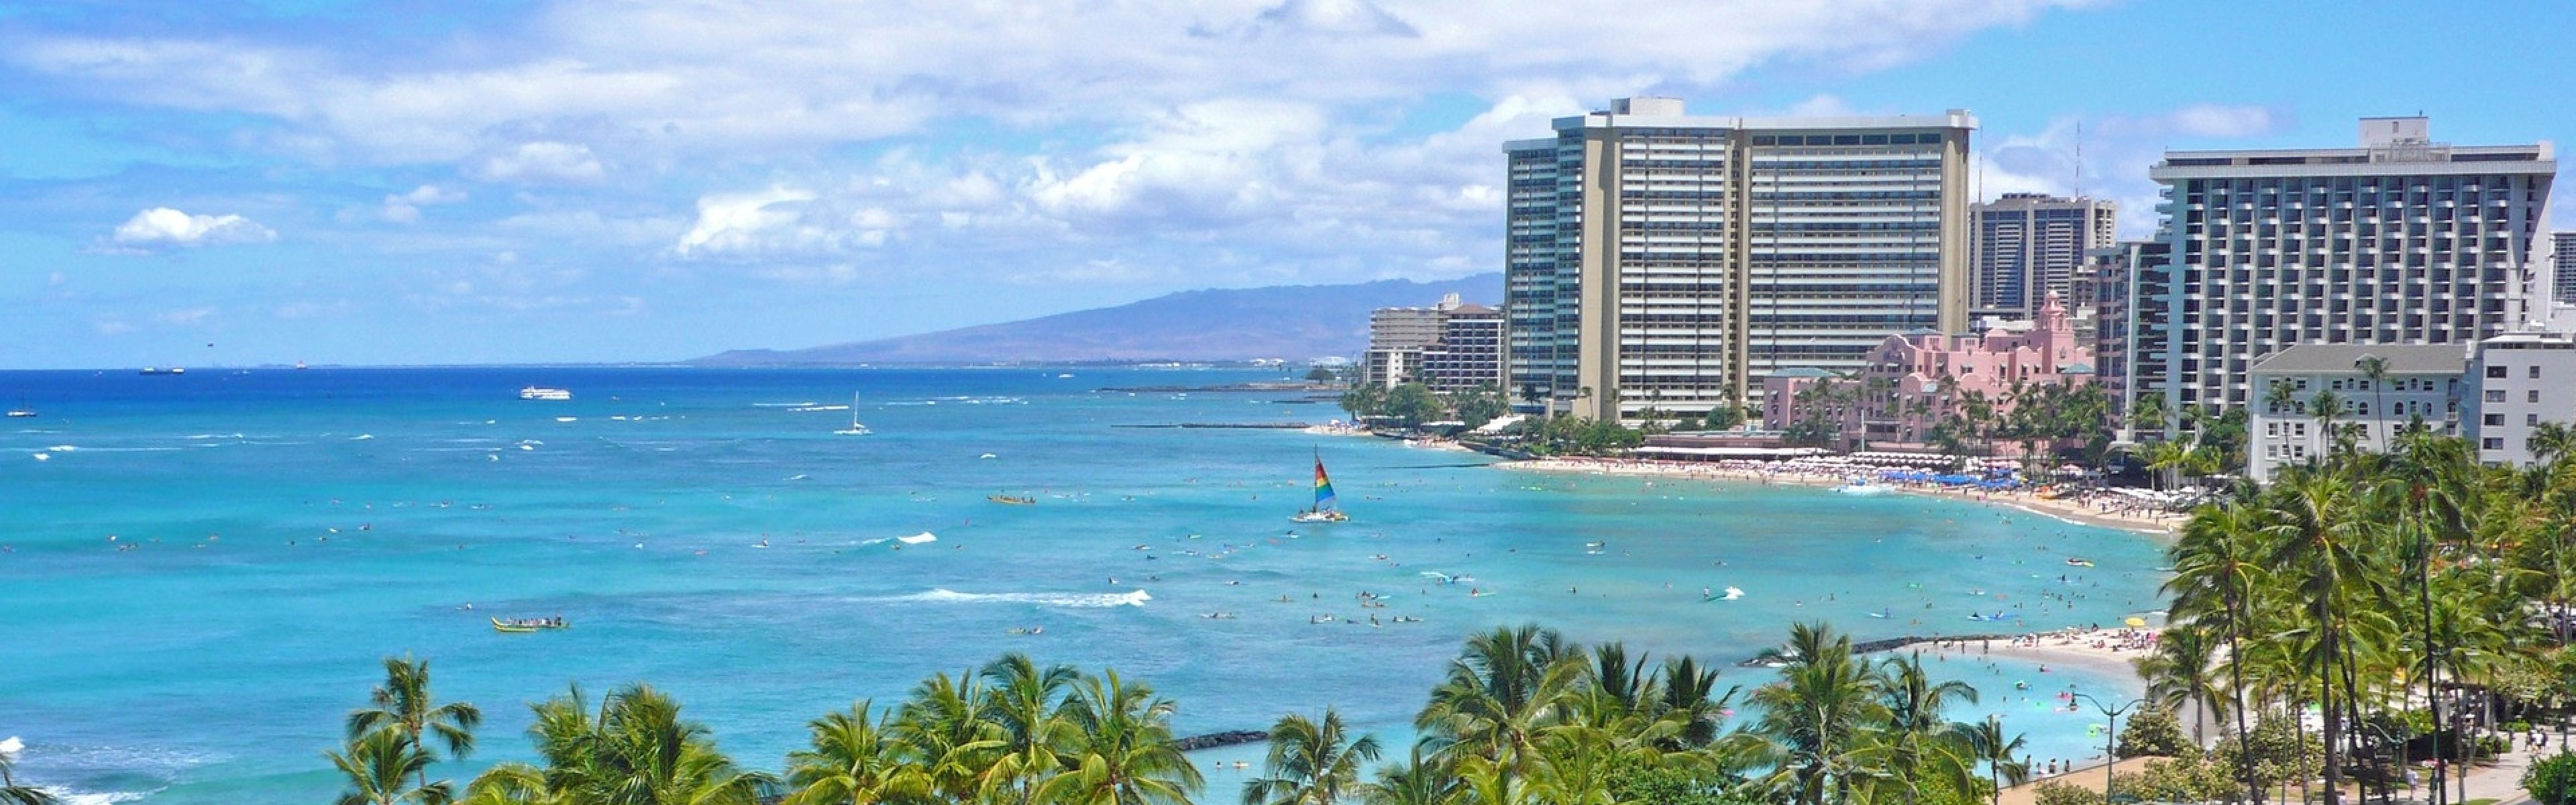 3840x1200  Wallpaper honolulu hawaii beach, united states, palm trees, ocean,  sea,